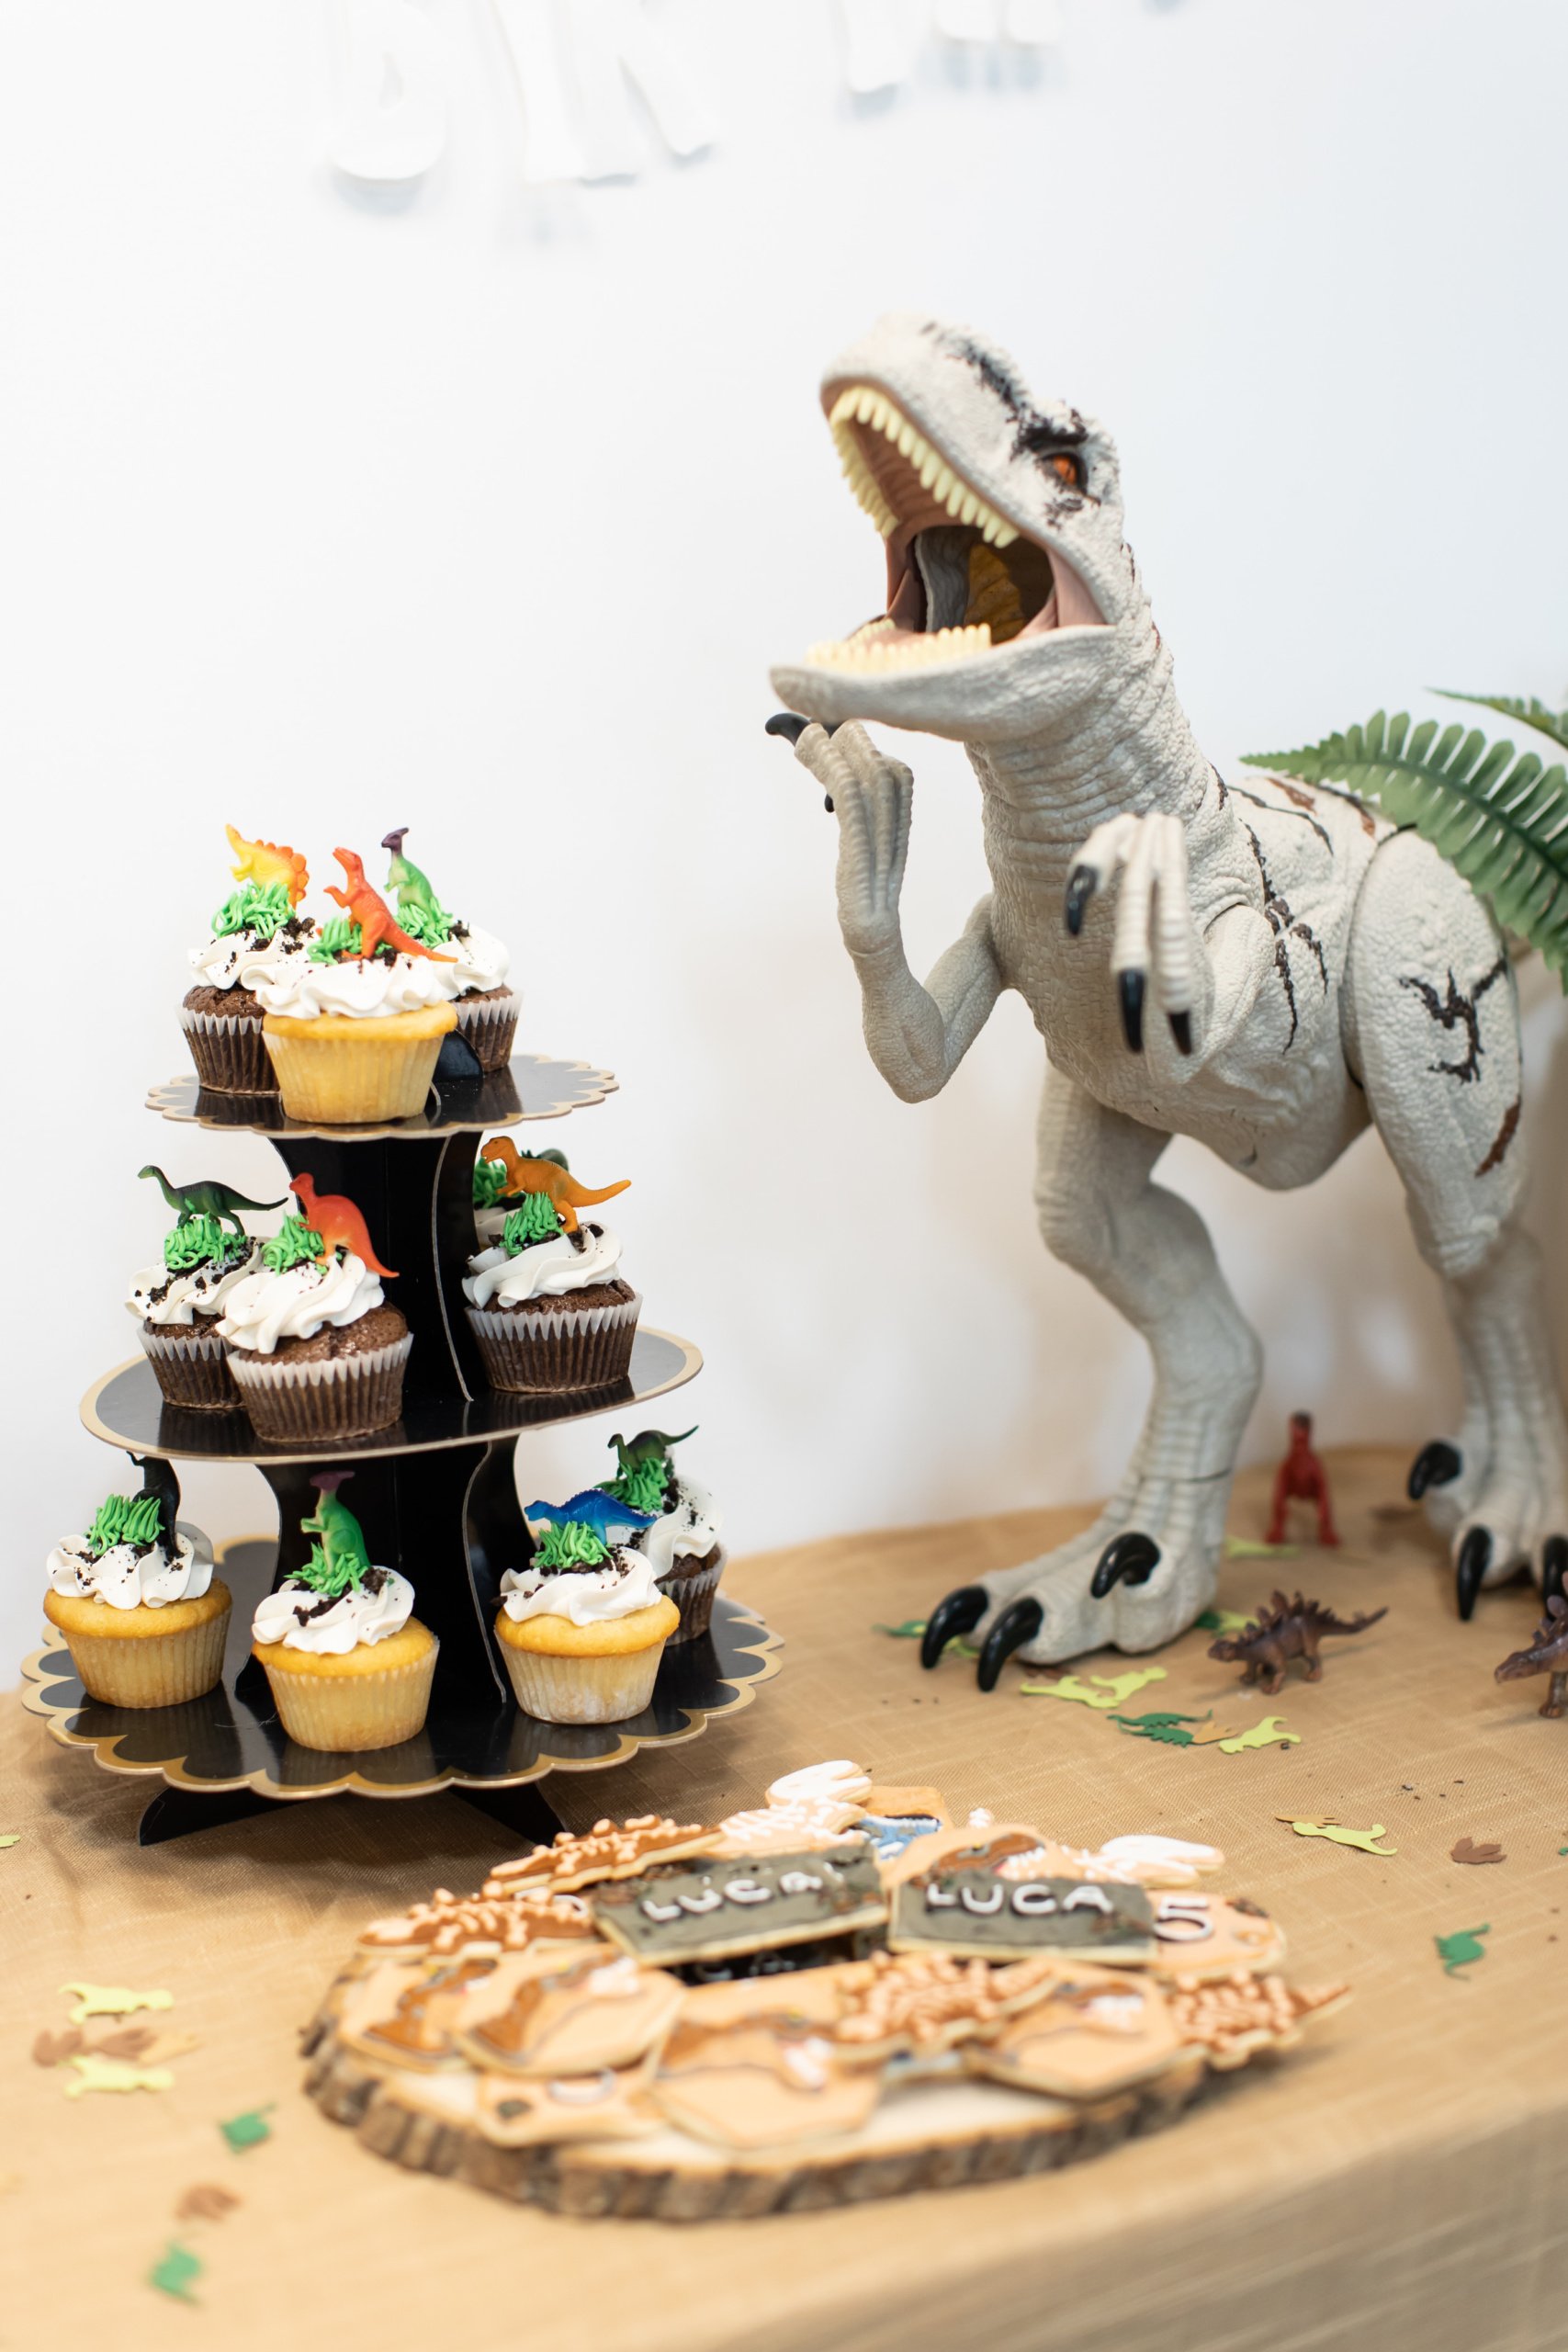 Luca's Dinosaur Themed 5th Birthday